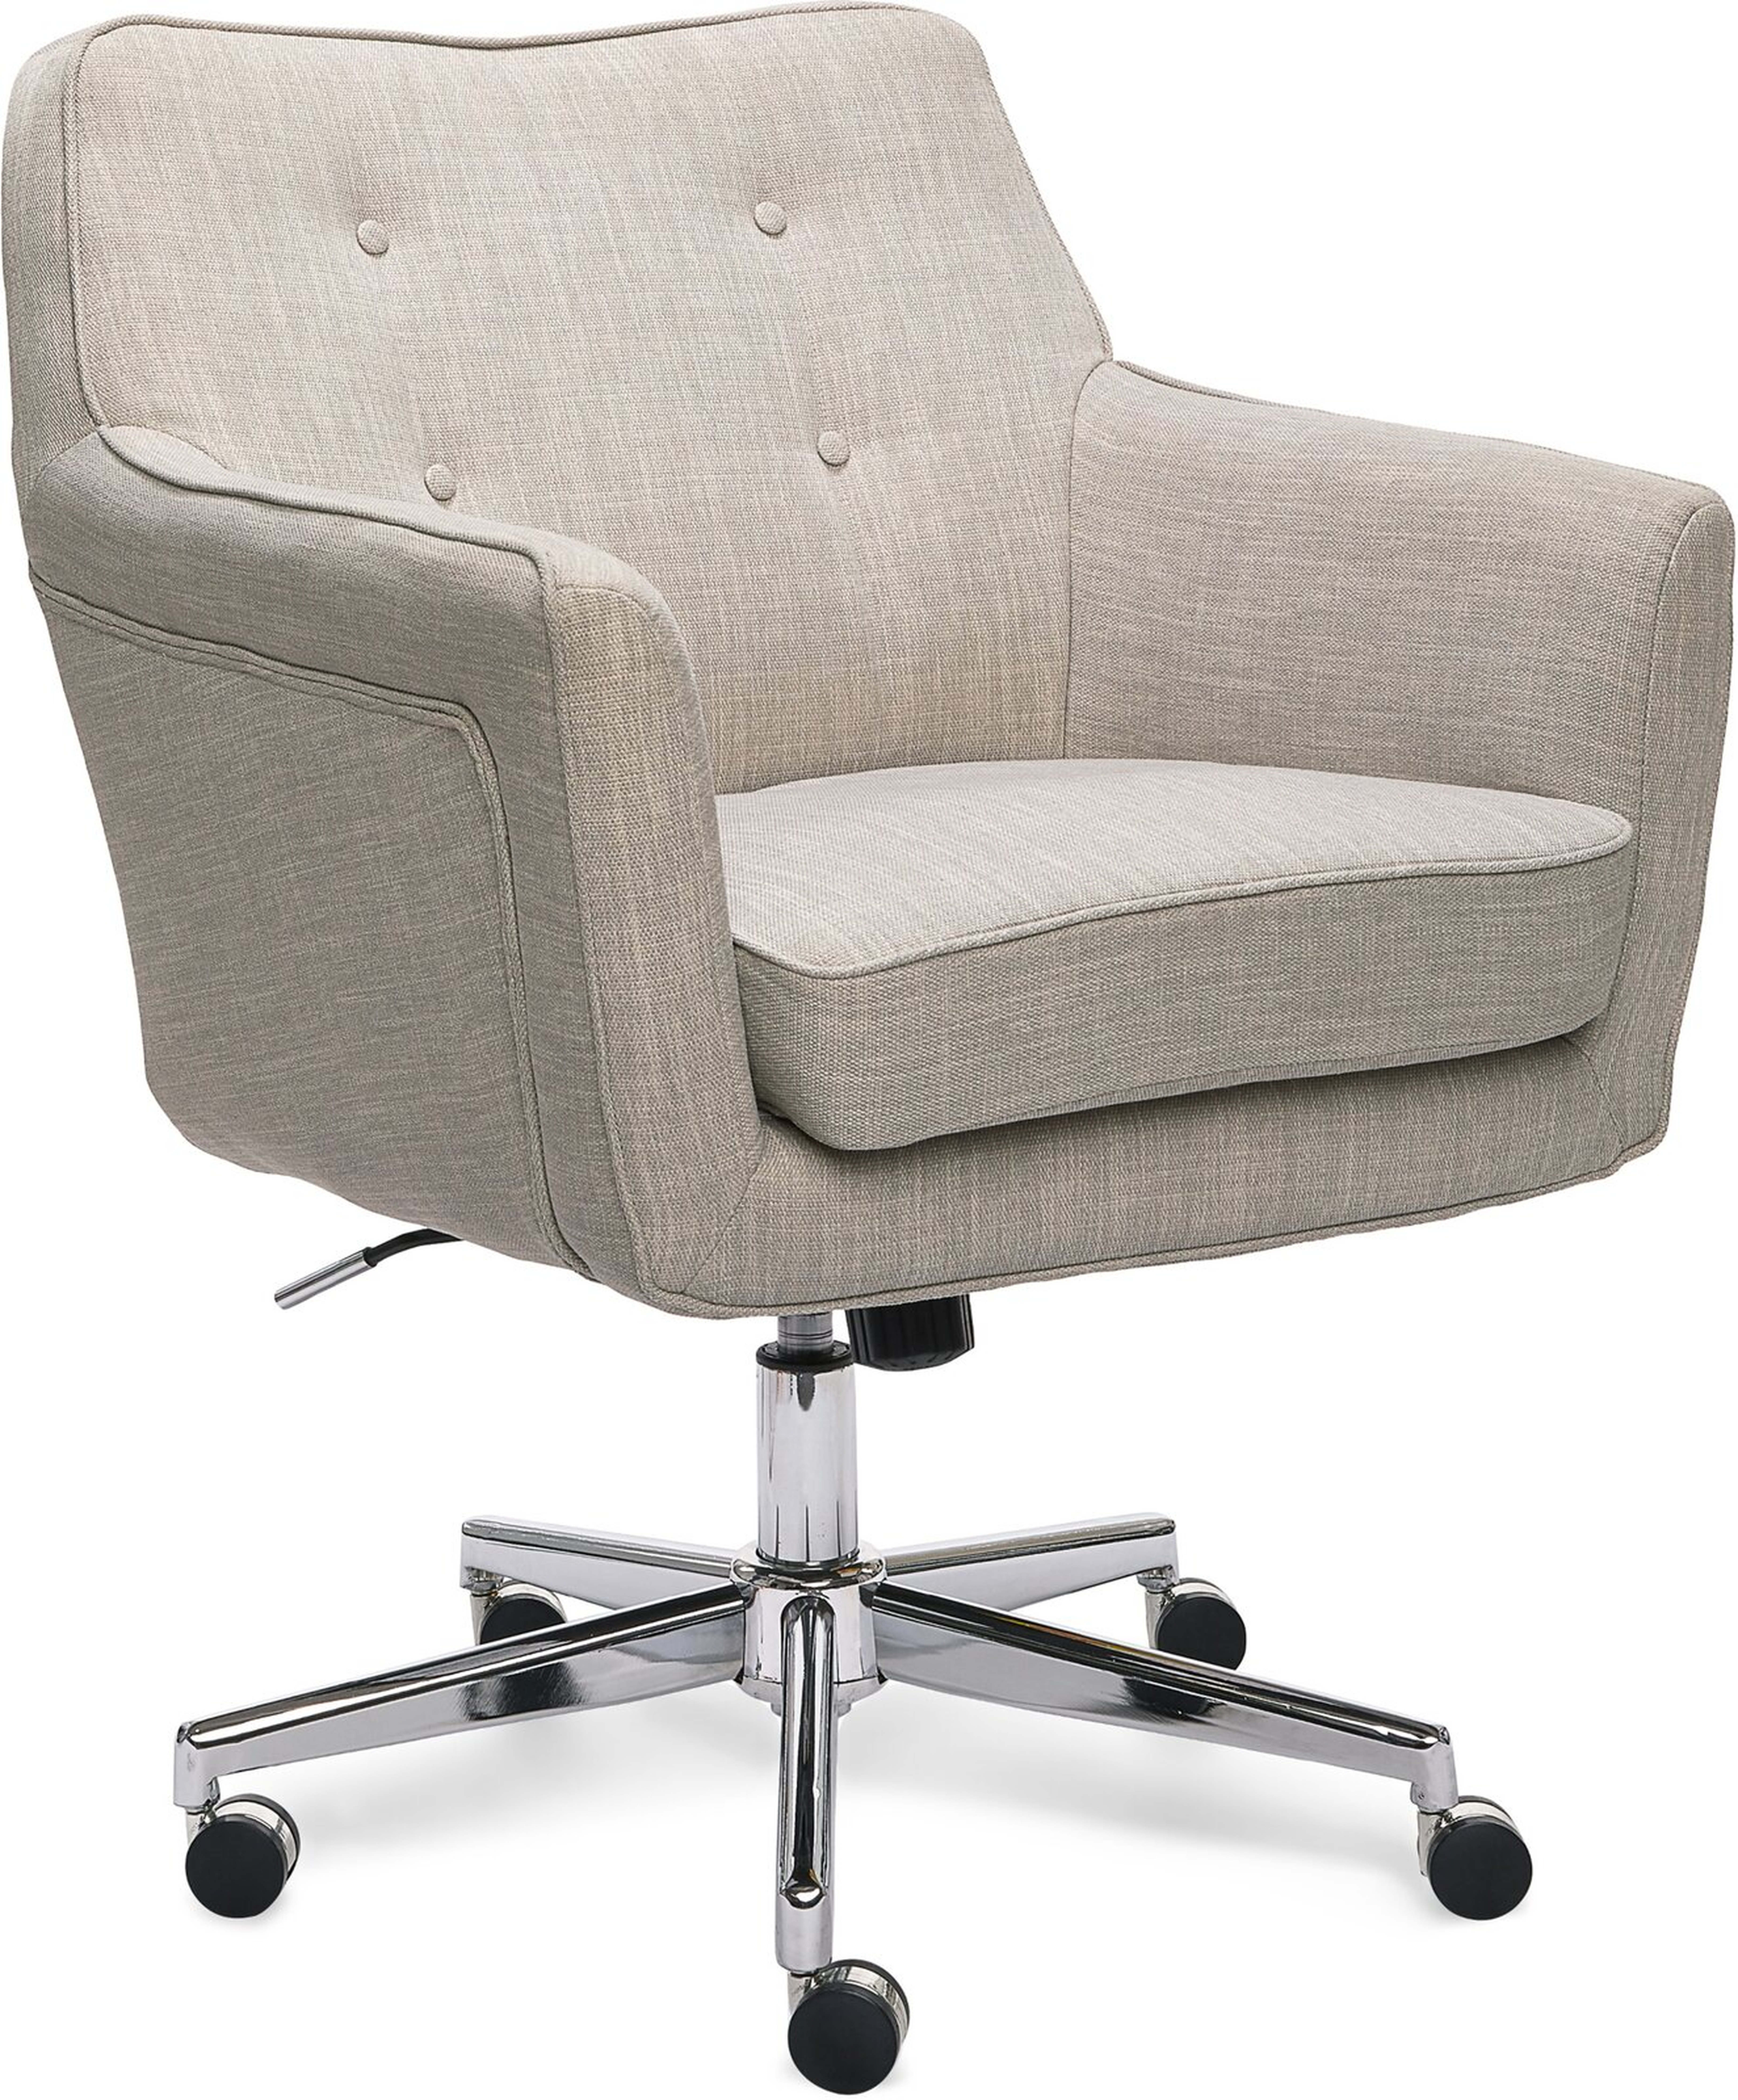 Serta Ashland Mid-Back Desk Chair - Wayfair